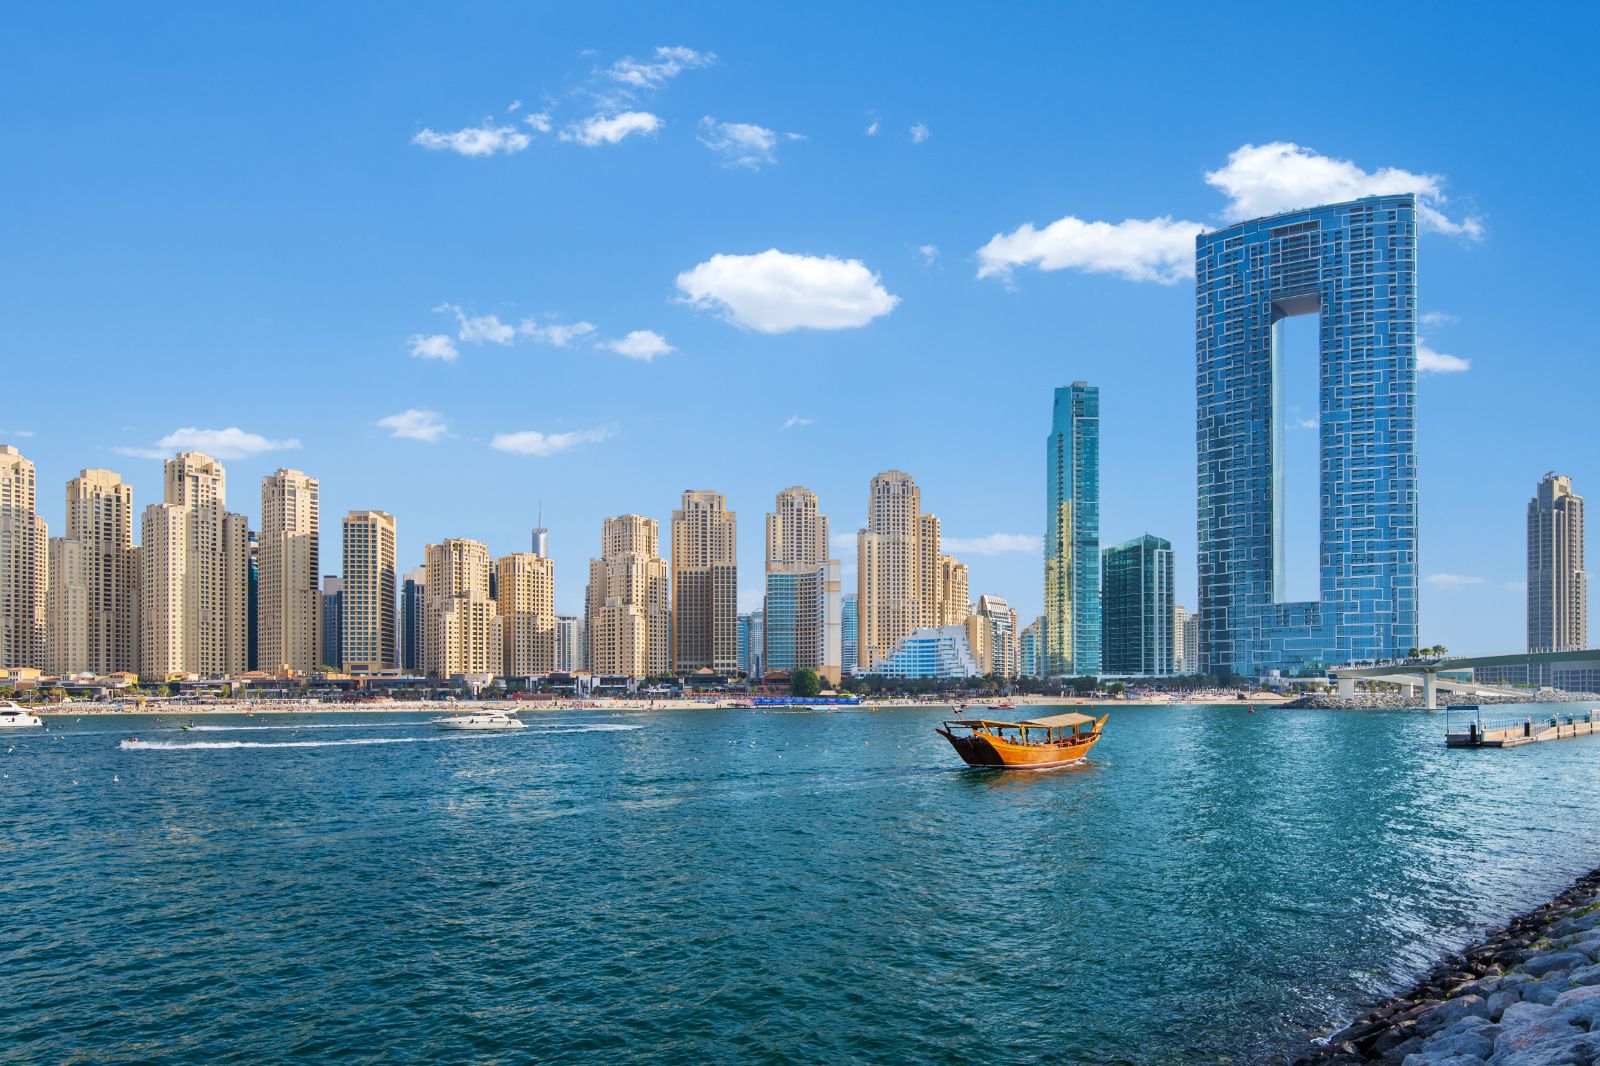 luxury resort Address in Dubai and the skyline